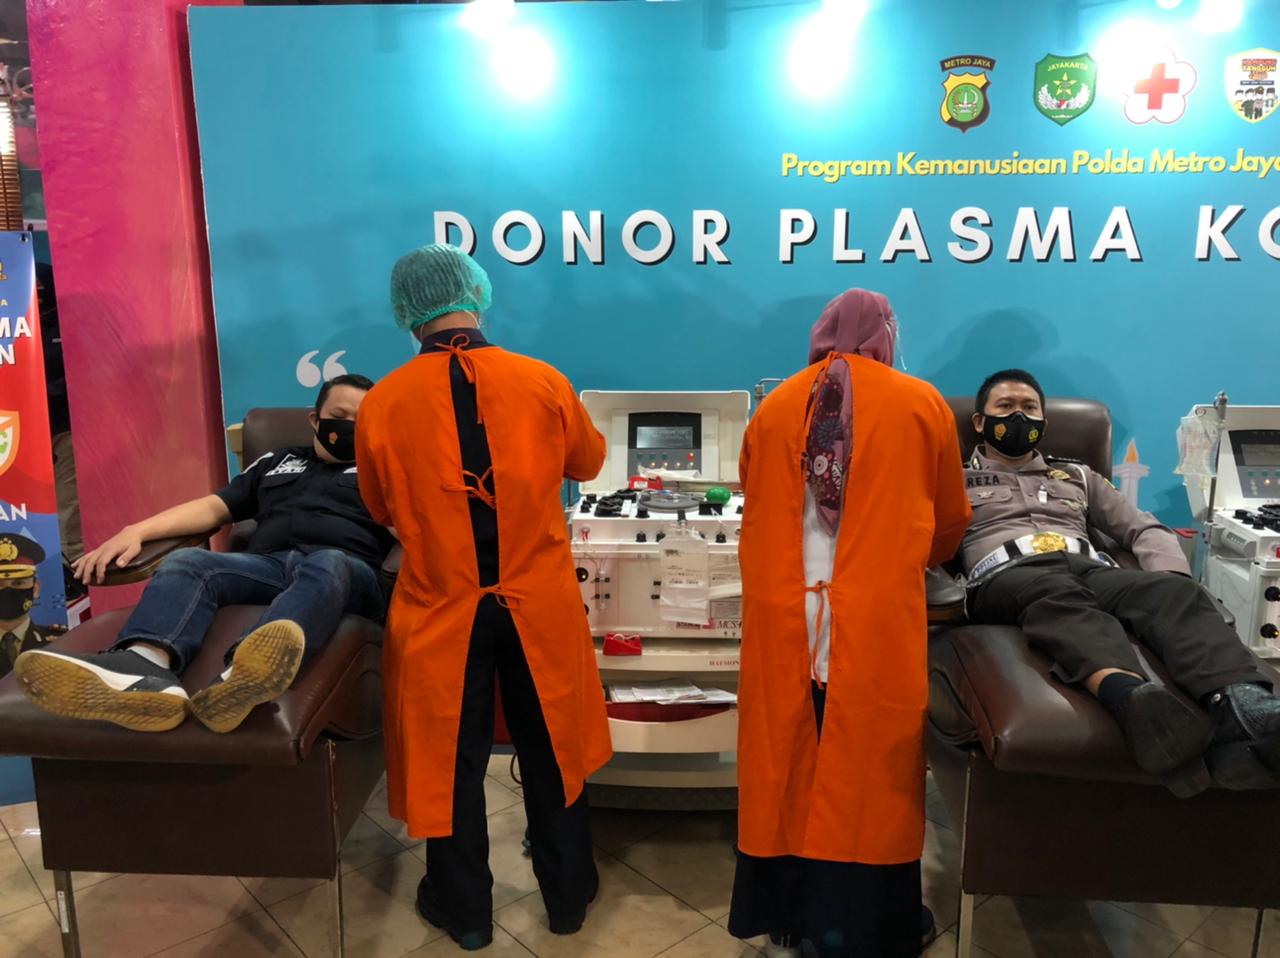 Anggota Polda Metro Jaya laksanakan donor plasma konsavelen. (Foto : PMJ/Nia).